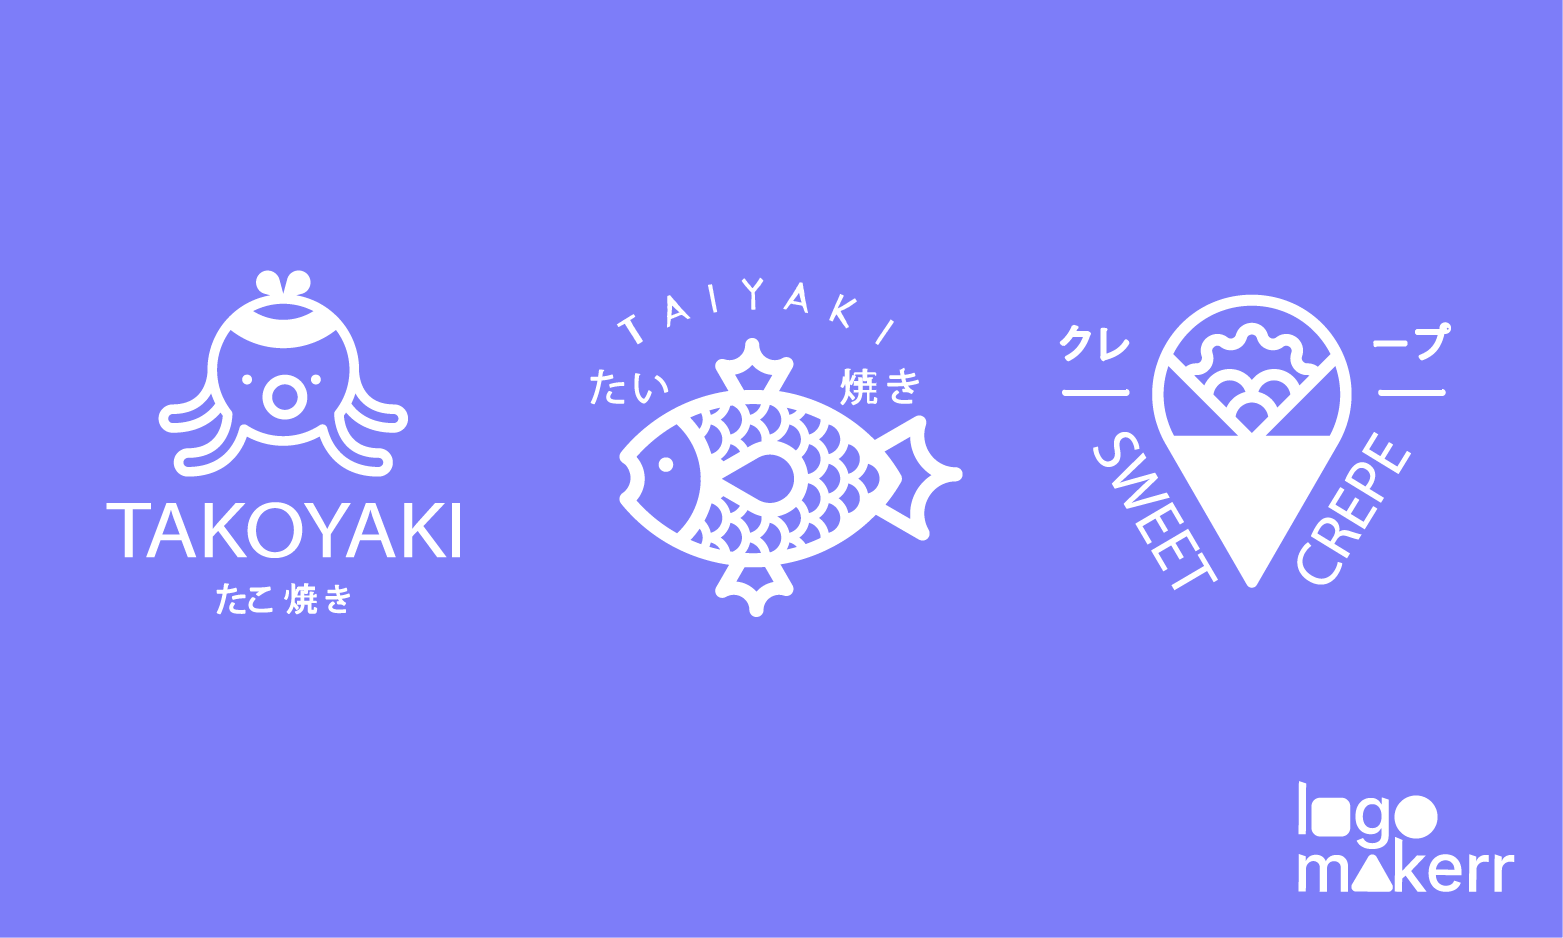 JP logos created by logomakerr.ai